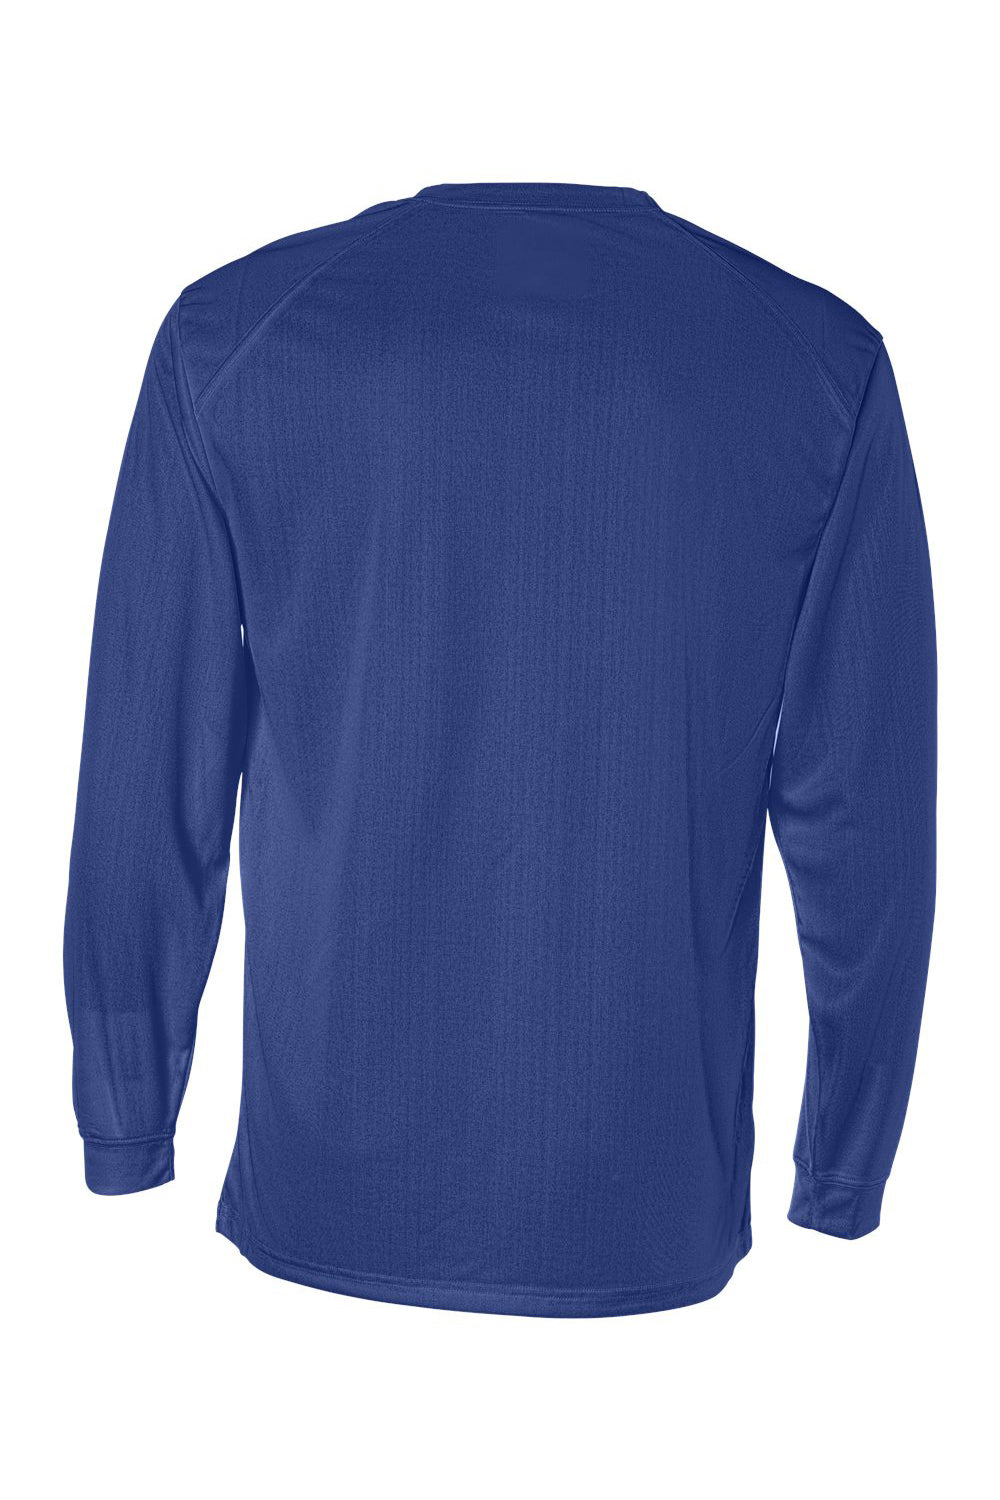 Badger 4104 Mens B-Core Moisture Wicking Long Sleeve Crewneck T-Shirt Royal Blue Flat Back